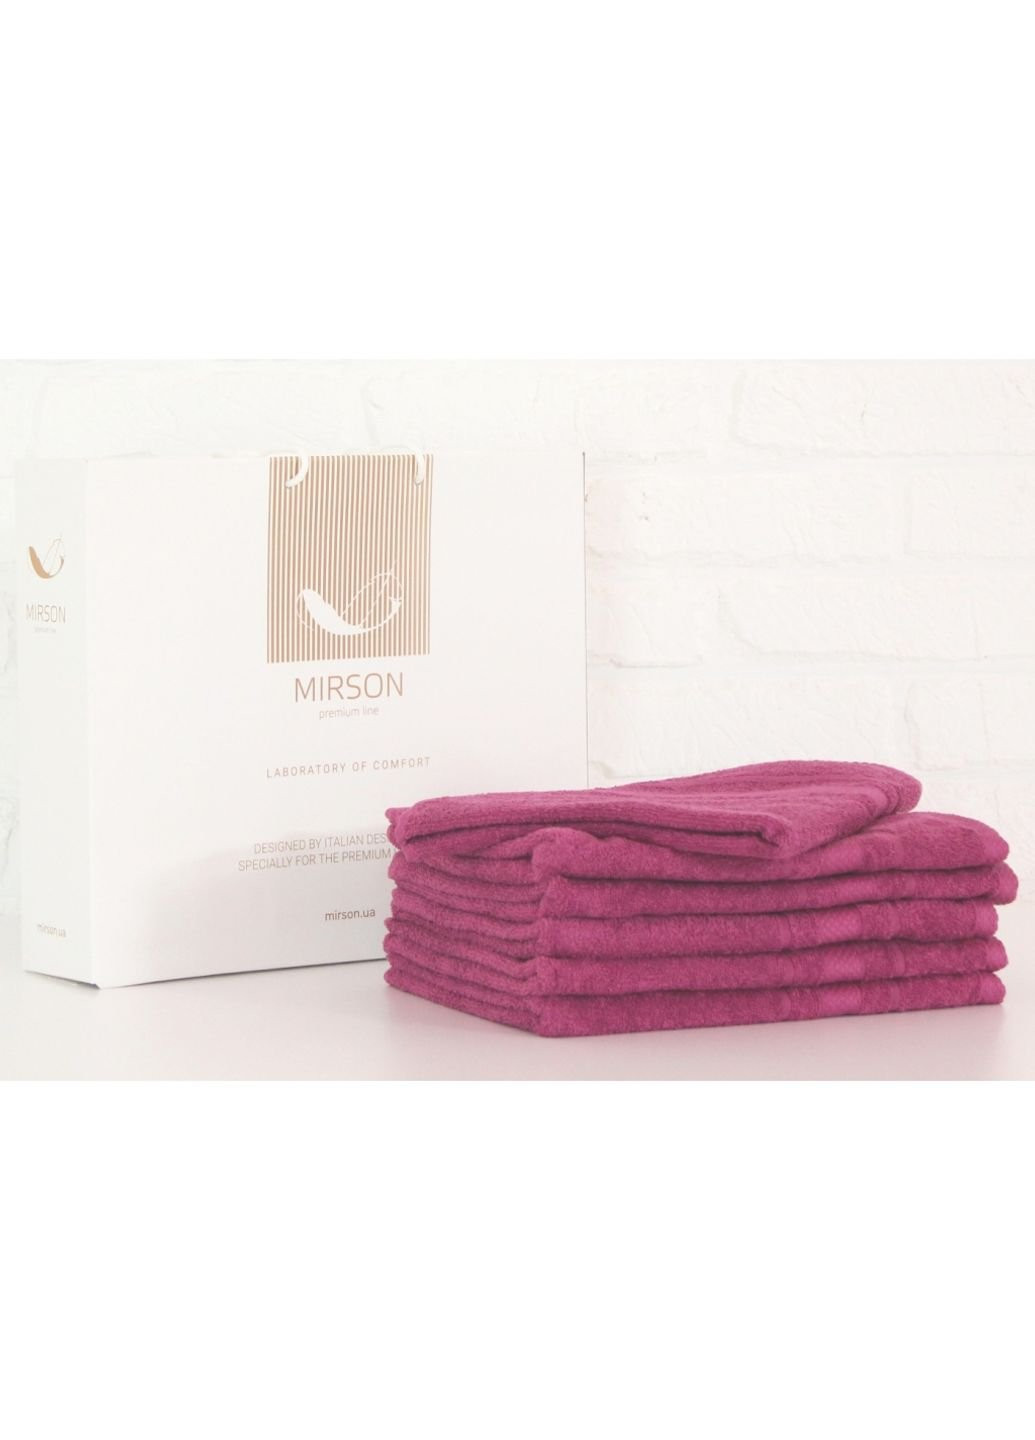 No Brand полотенце mirson набор банных №5081 elite softness plum 70х140 6 шт (2200003524215) малиновый производство - Украина